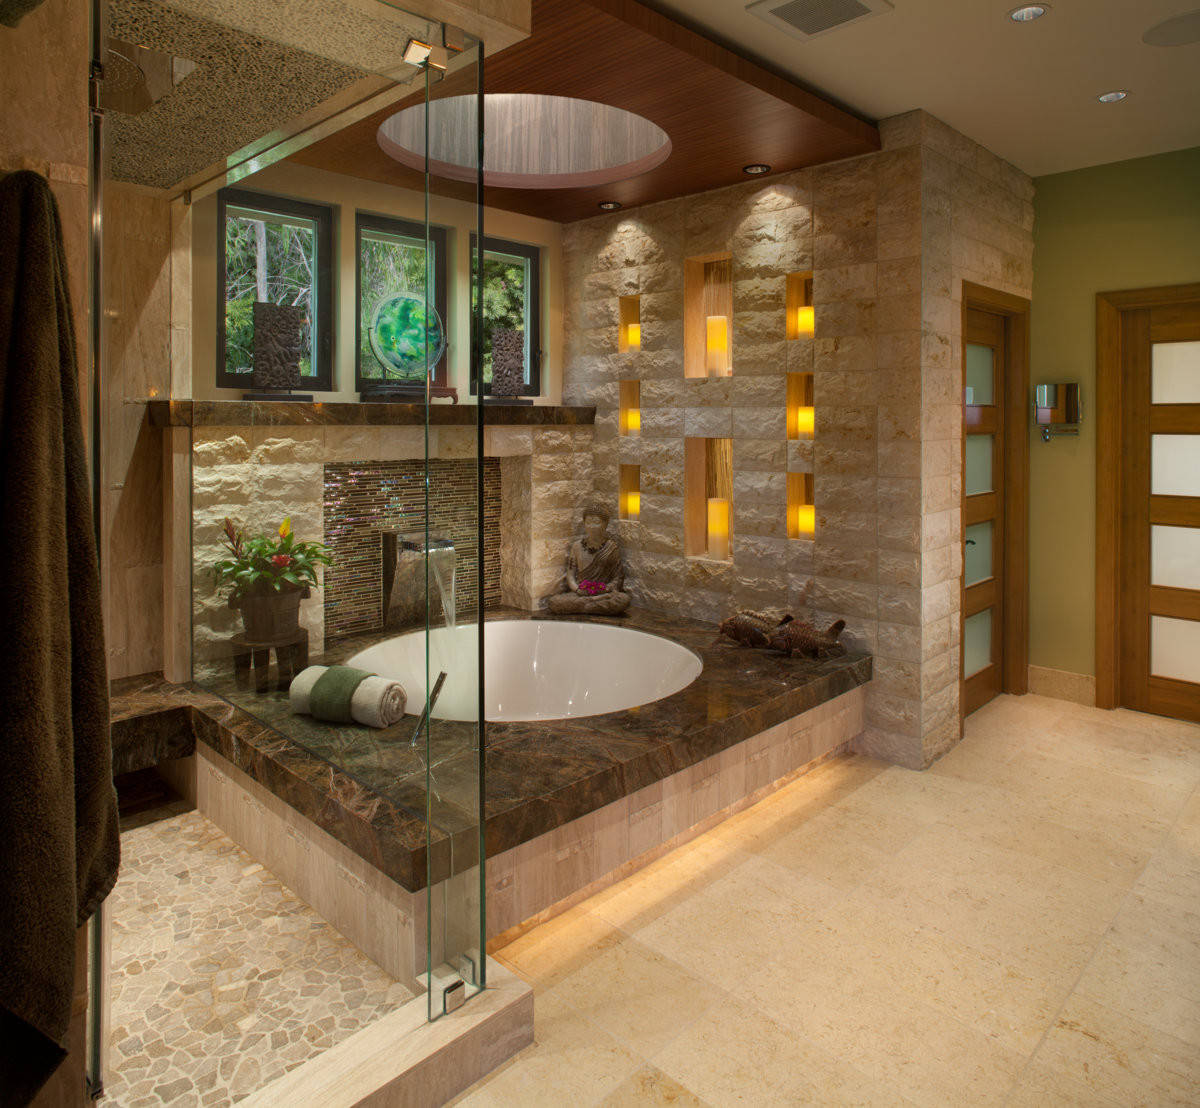 Zen Paradise - Asian - Bathroom - San Diego - by James Patrick Walters |  Houzz UK